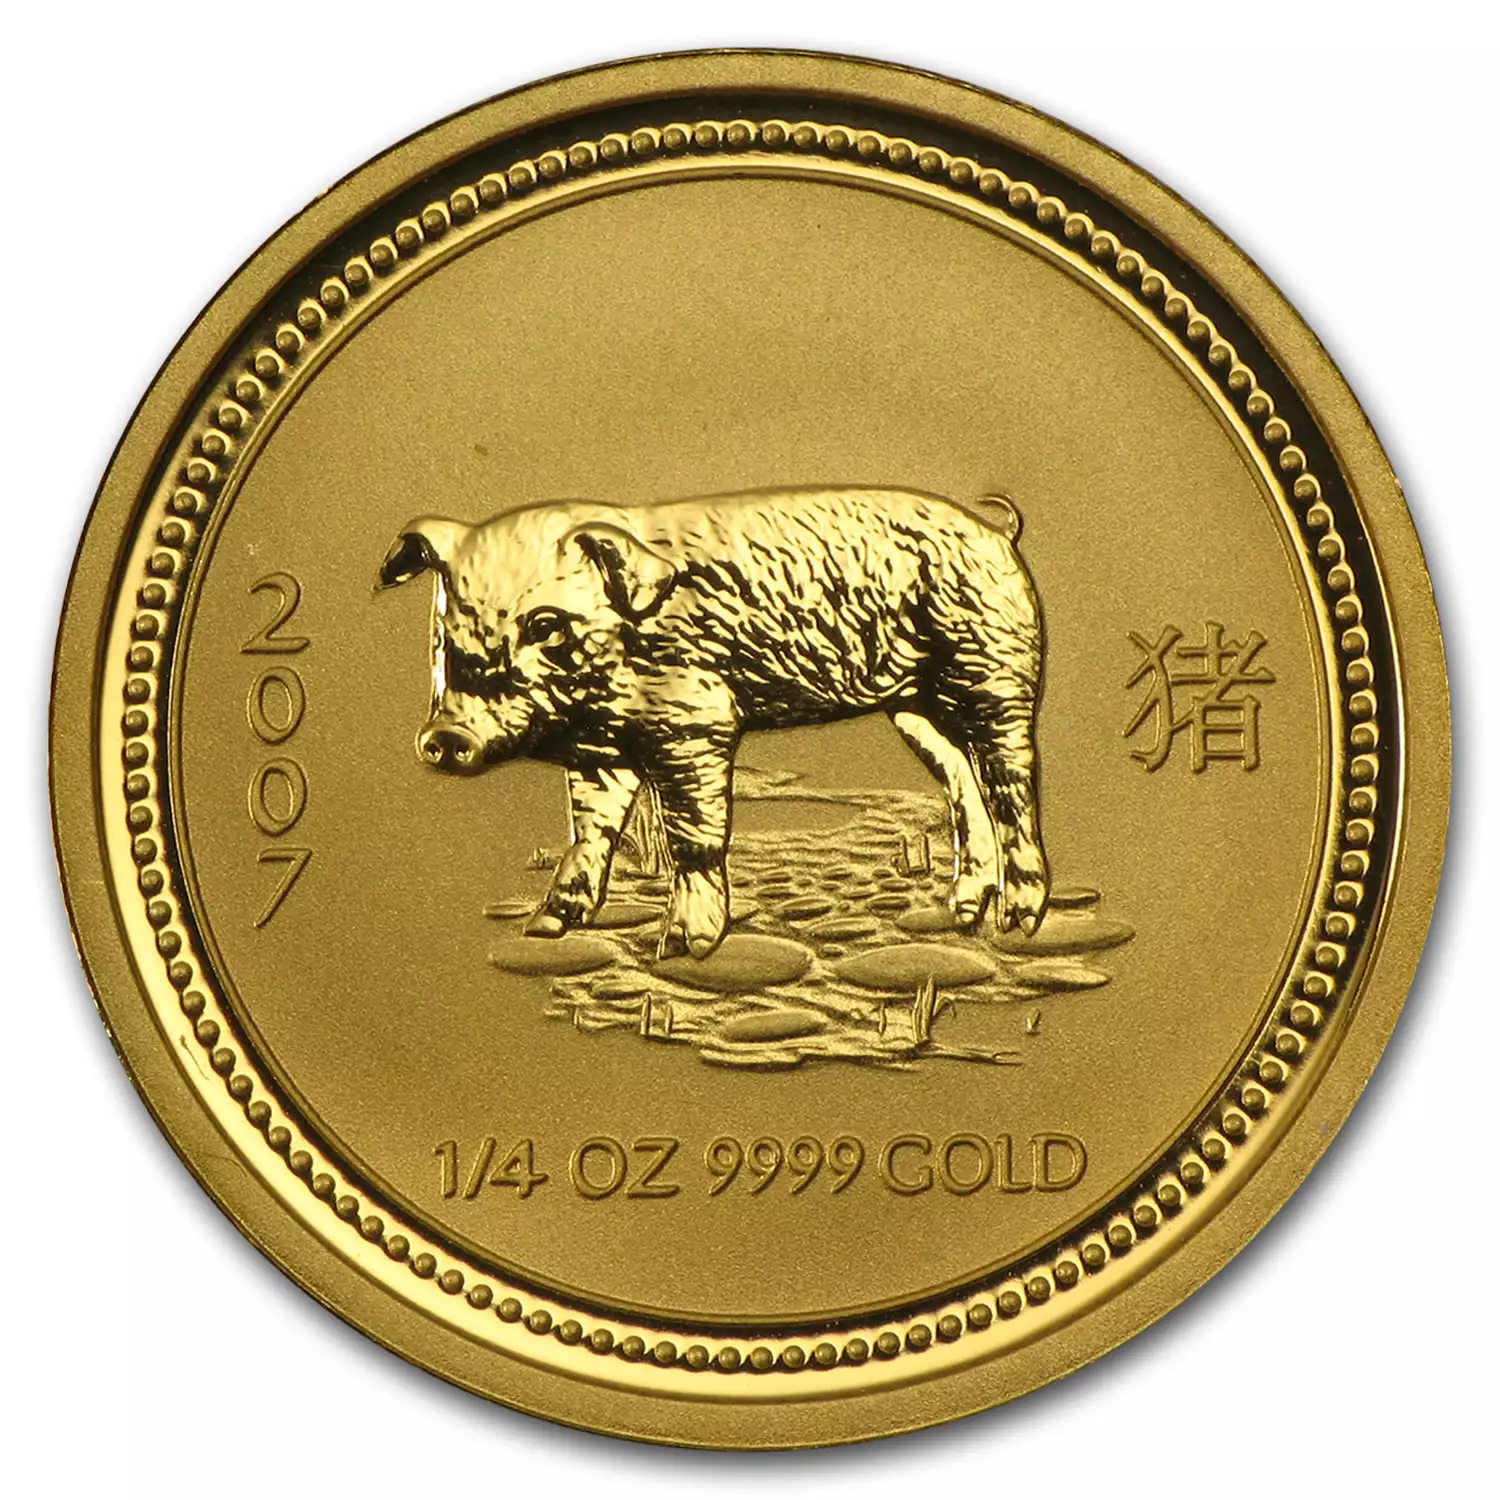 2007 1/4oz Australian Perth Mint Gold Lunar: Year of the Pig (2)